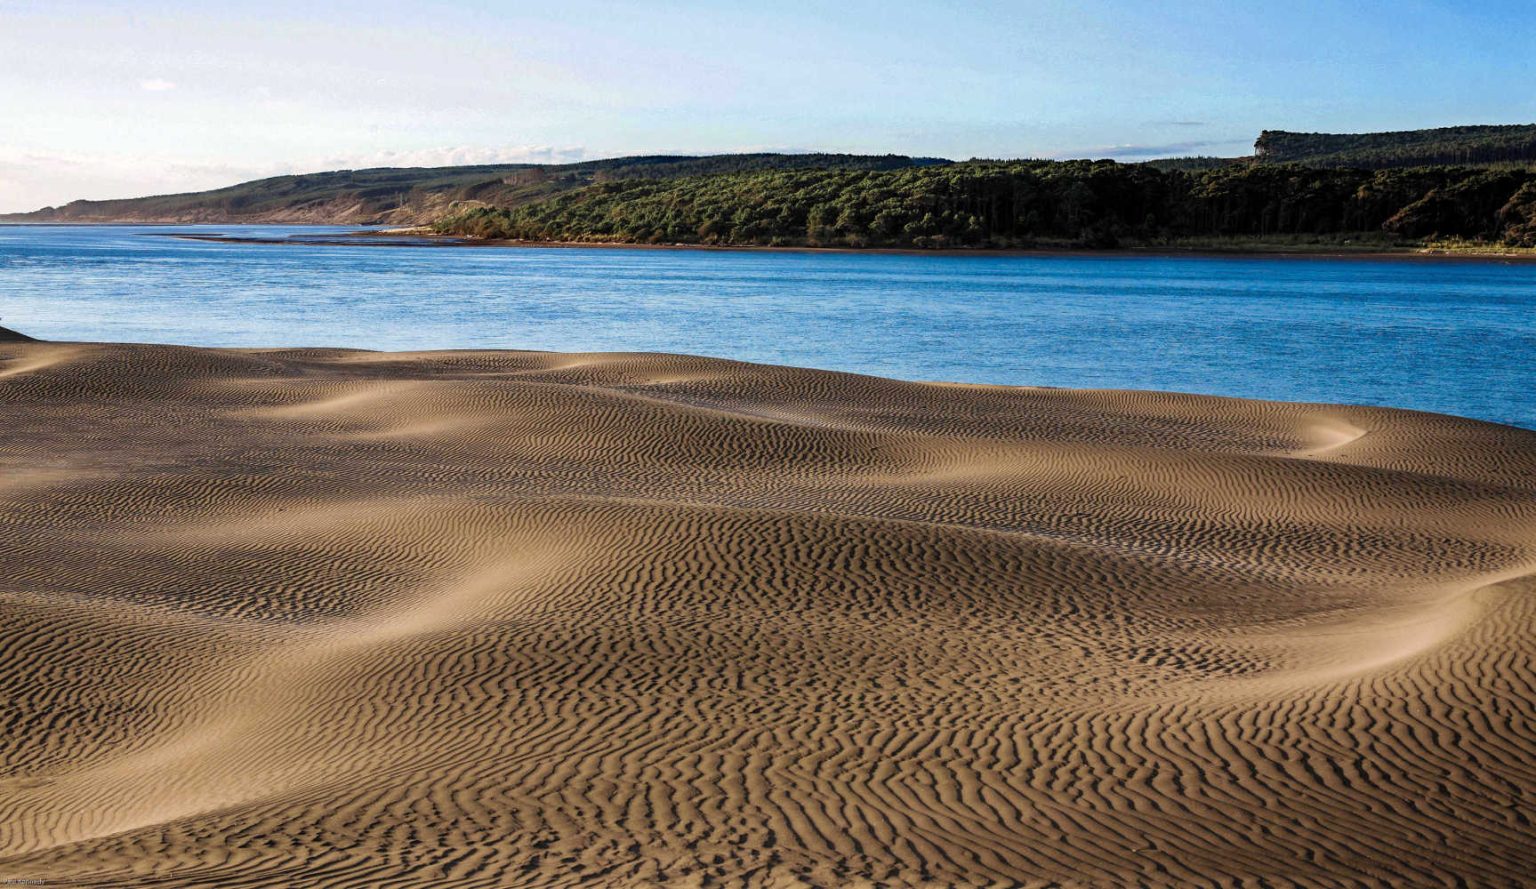 Sand dunes and Waikato River at Port Waikato, New Zealand